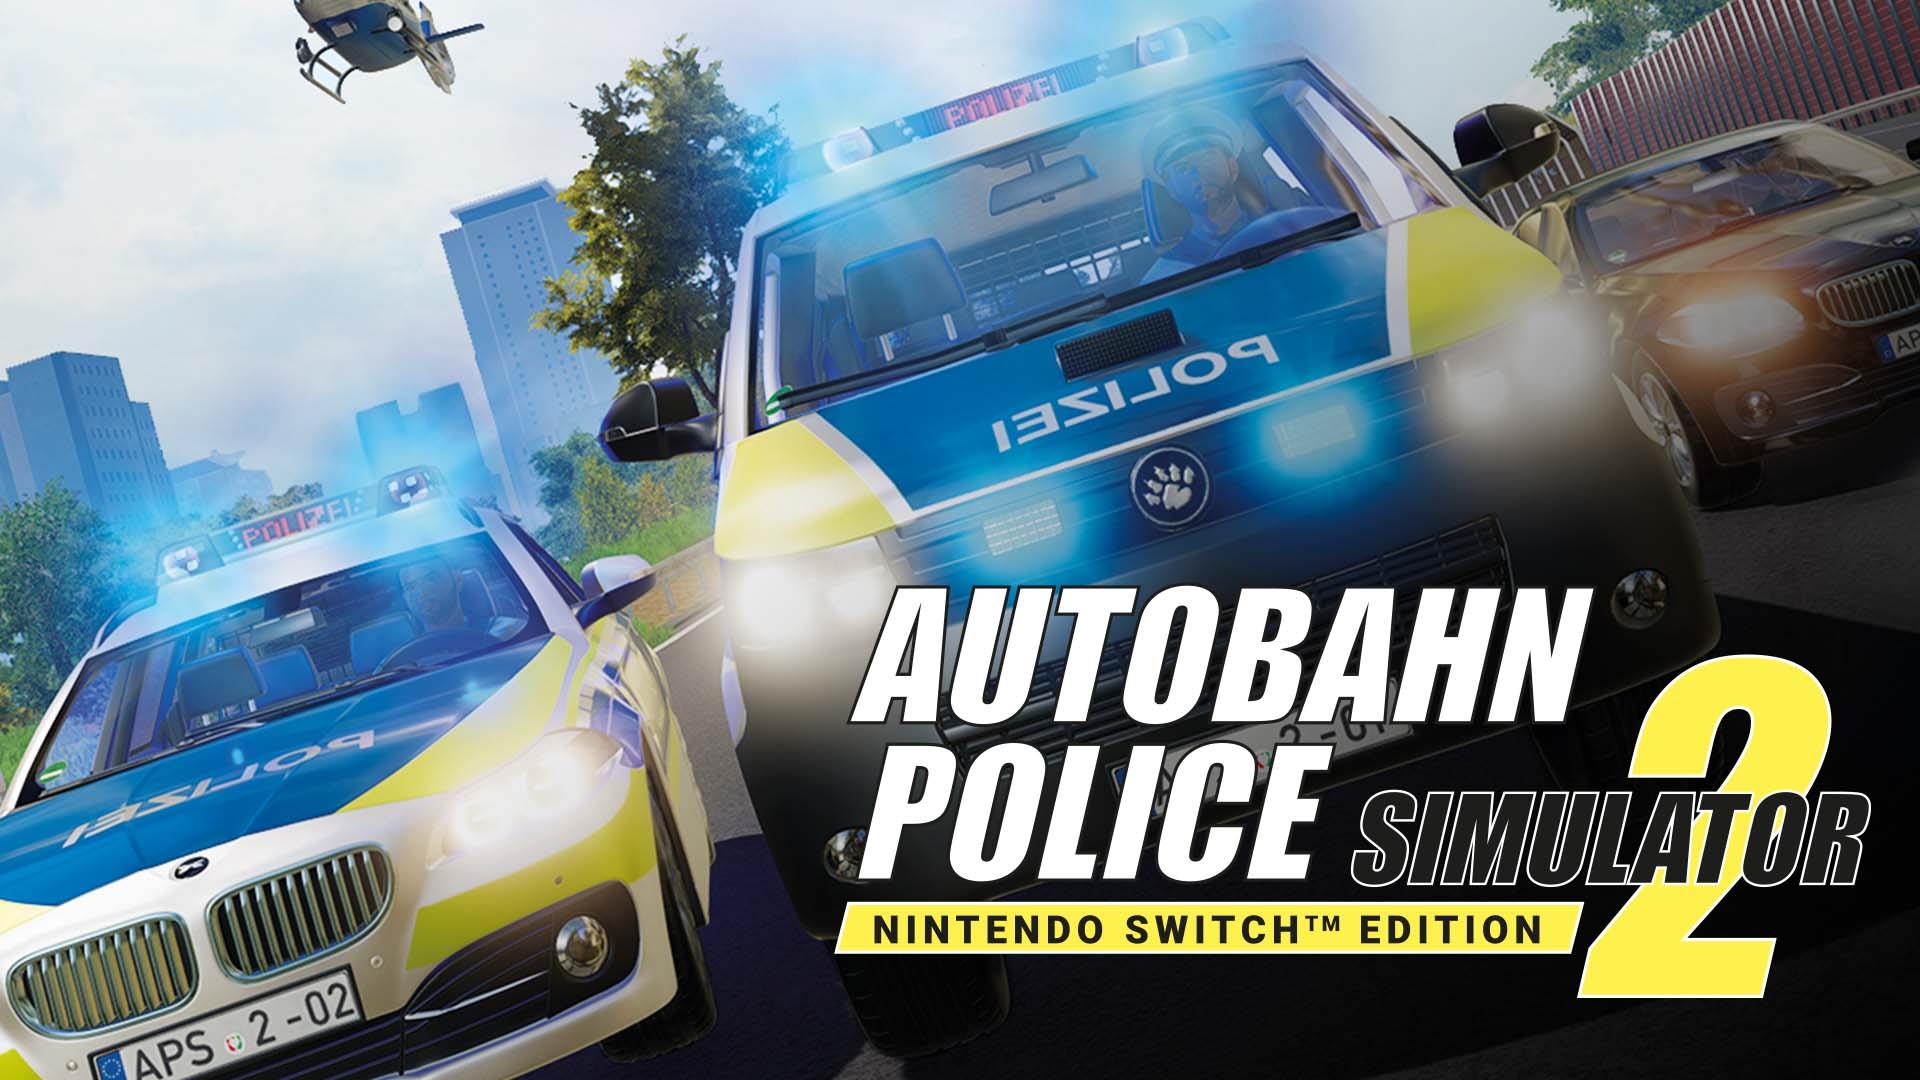 Autobahn Police Simulator 2 - Nintendo Switch™ Edition